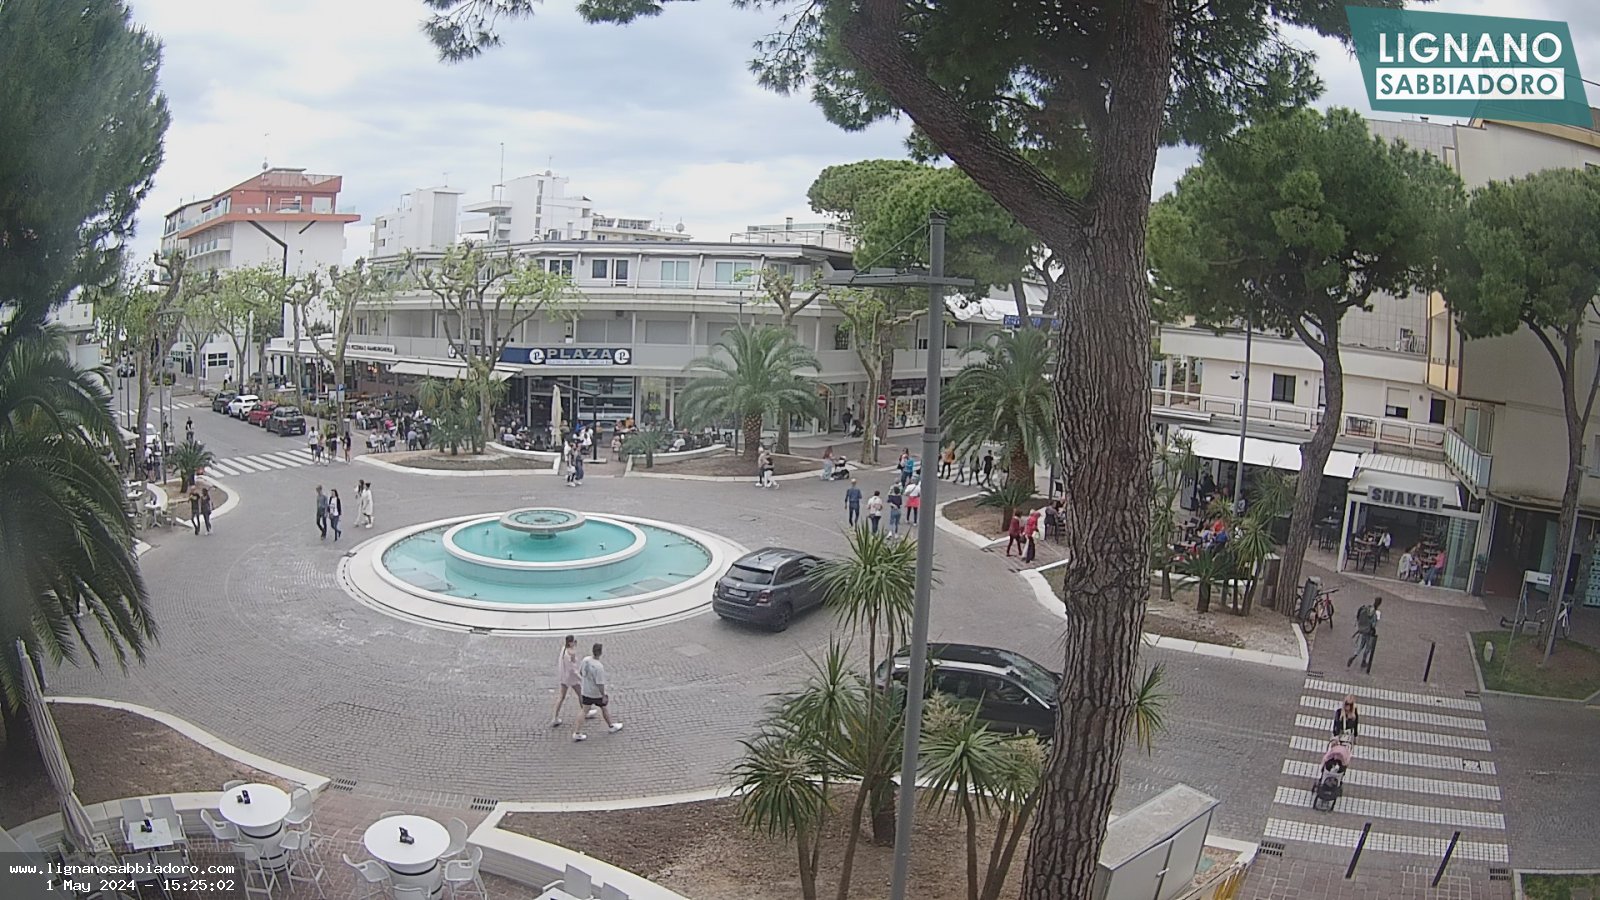 Webcam live streaming in Piazza Fontana im Zentrum